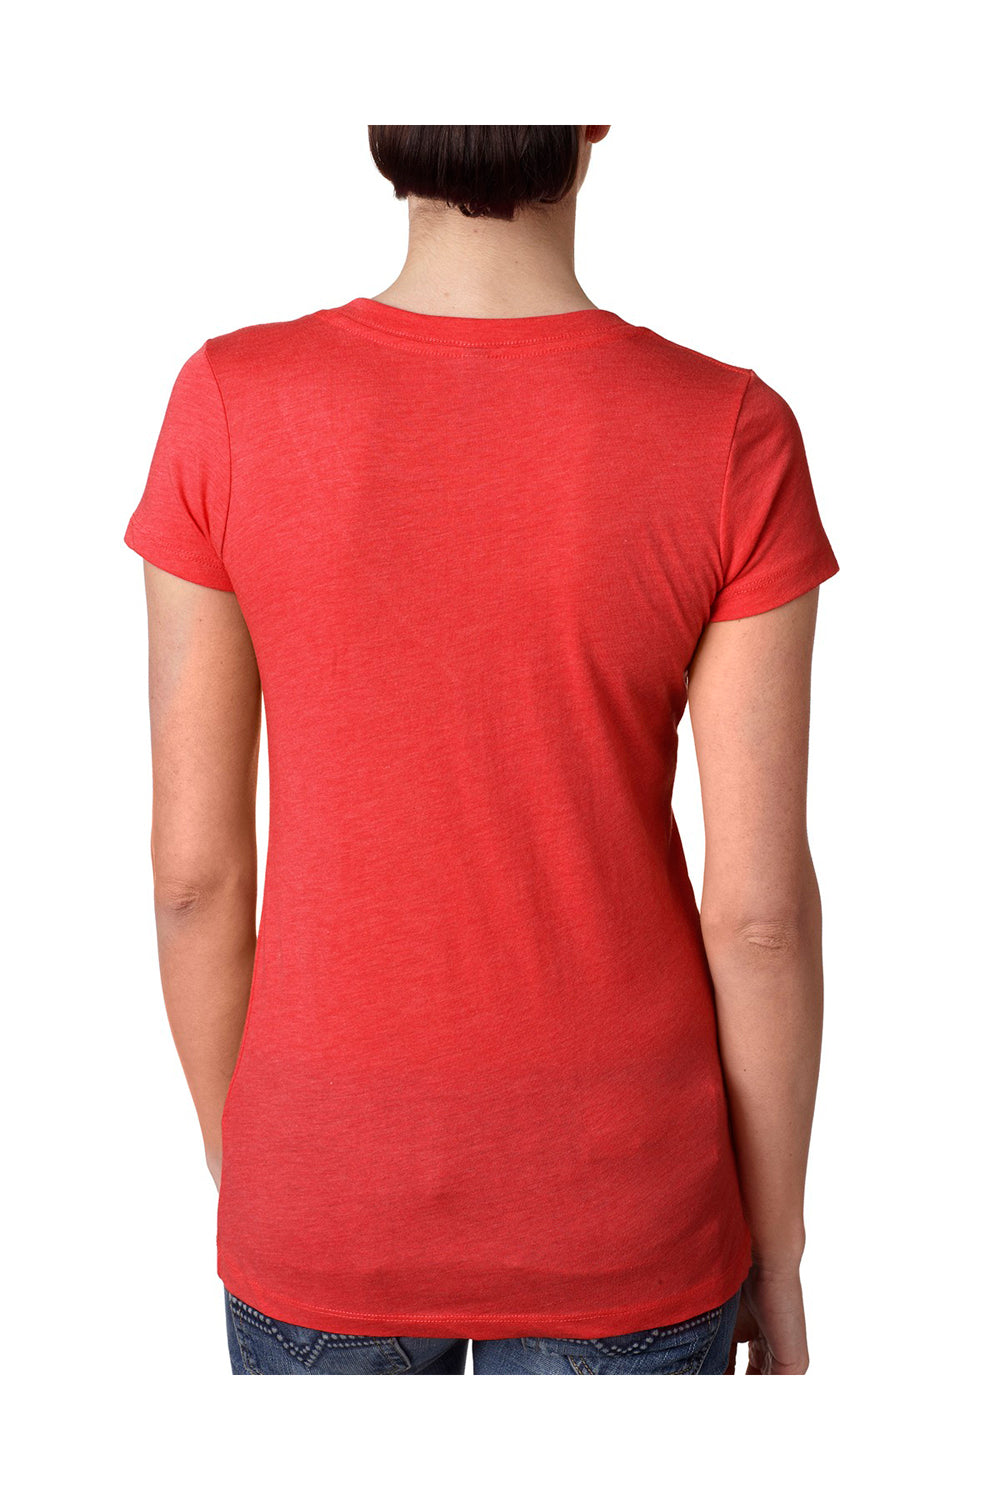 Next Level 6740 Womens Jersey Short Sleeve V-Neck T-Shirt Red Back